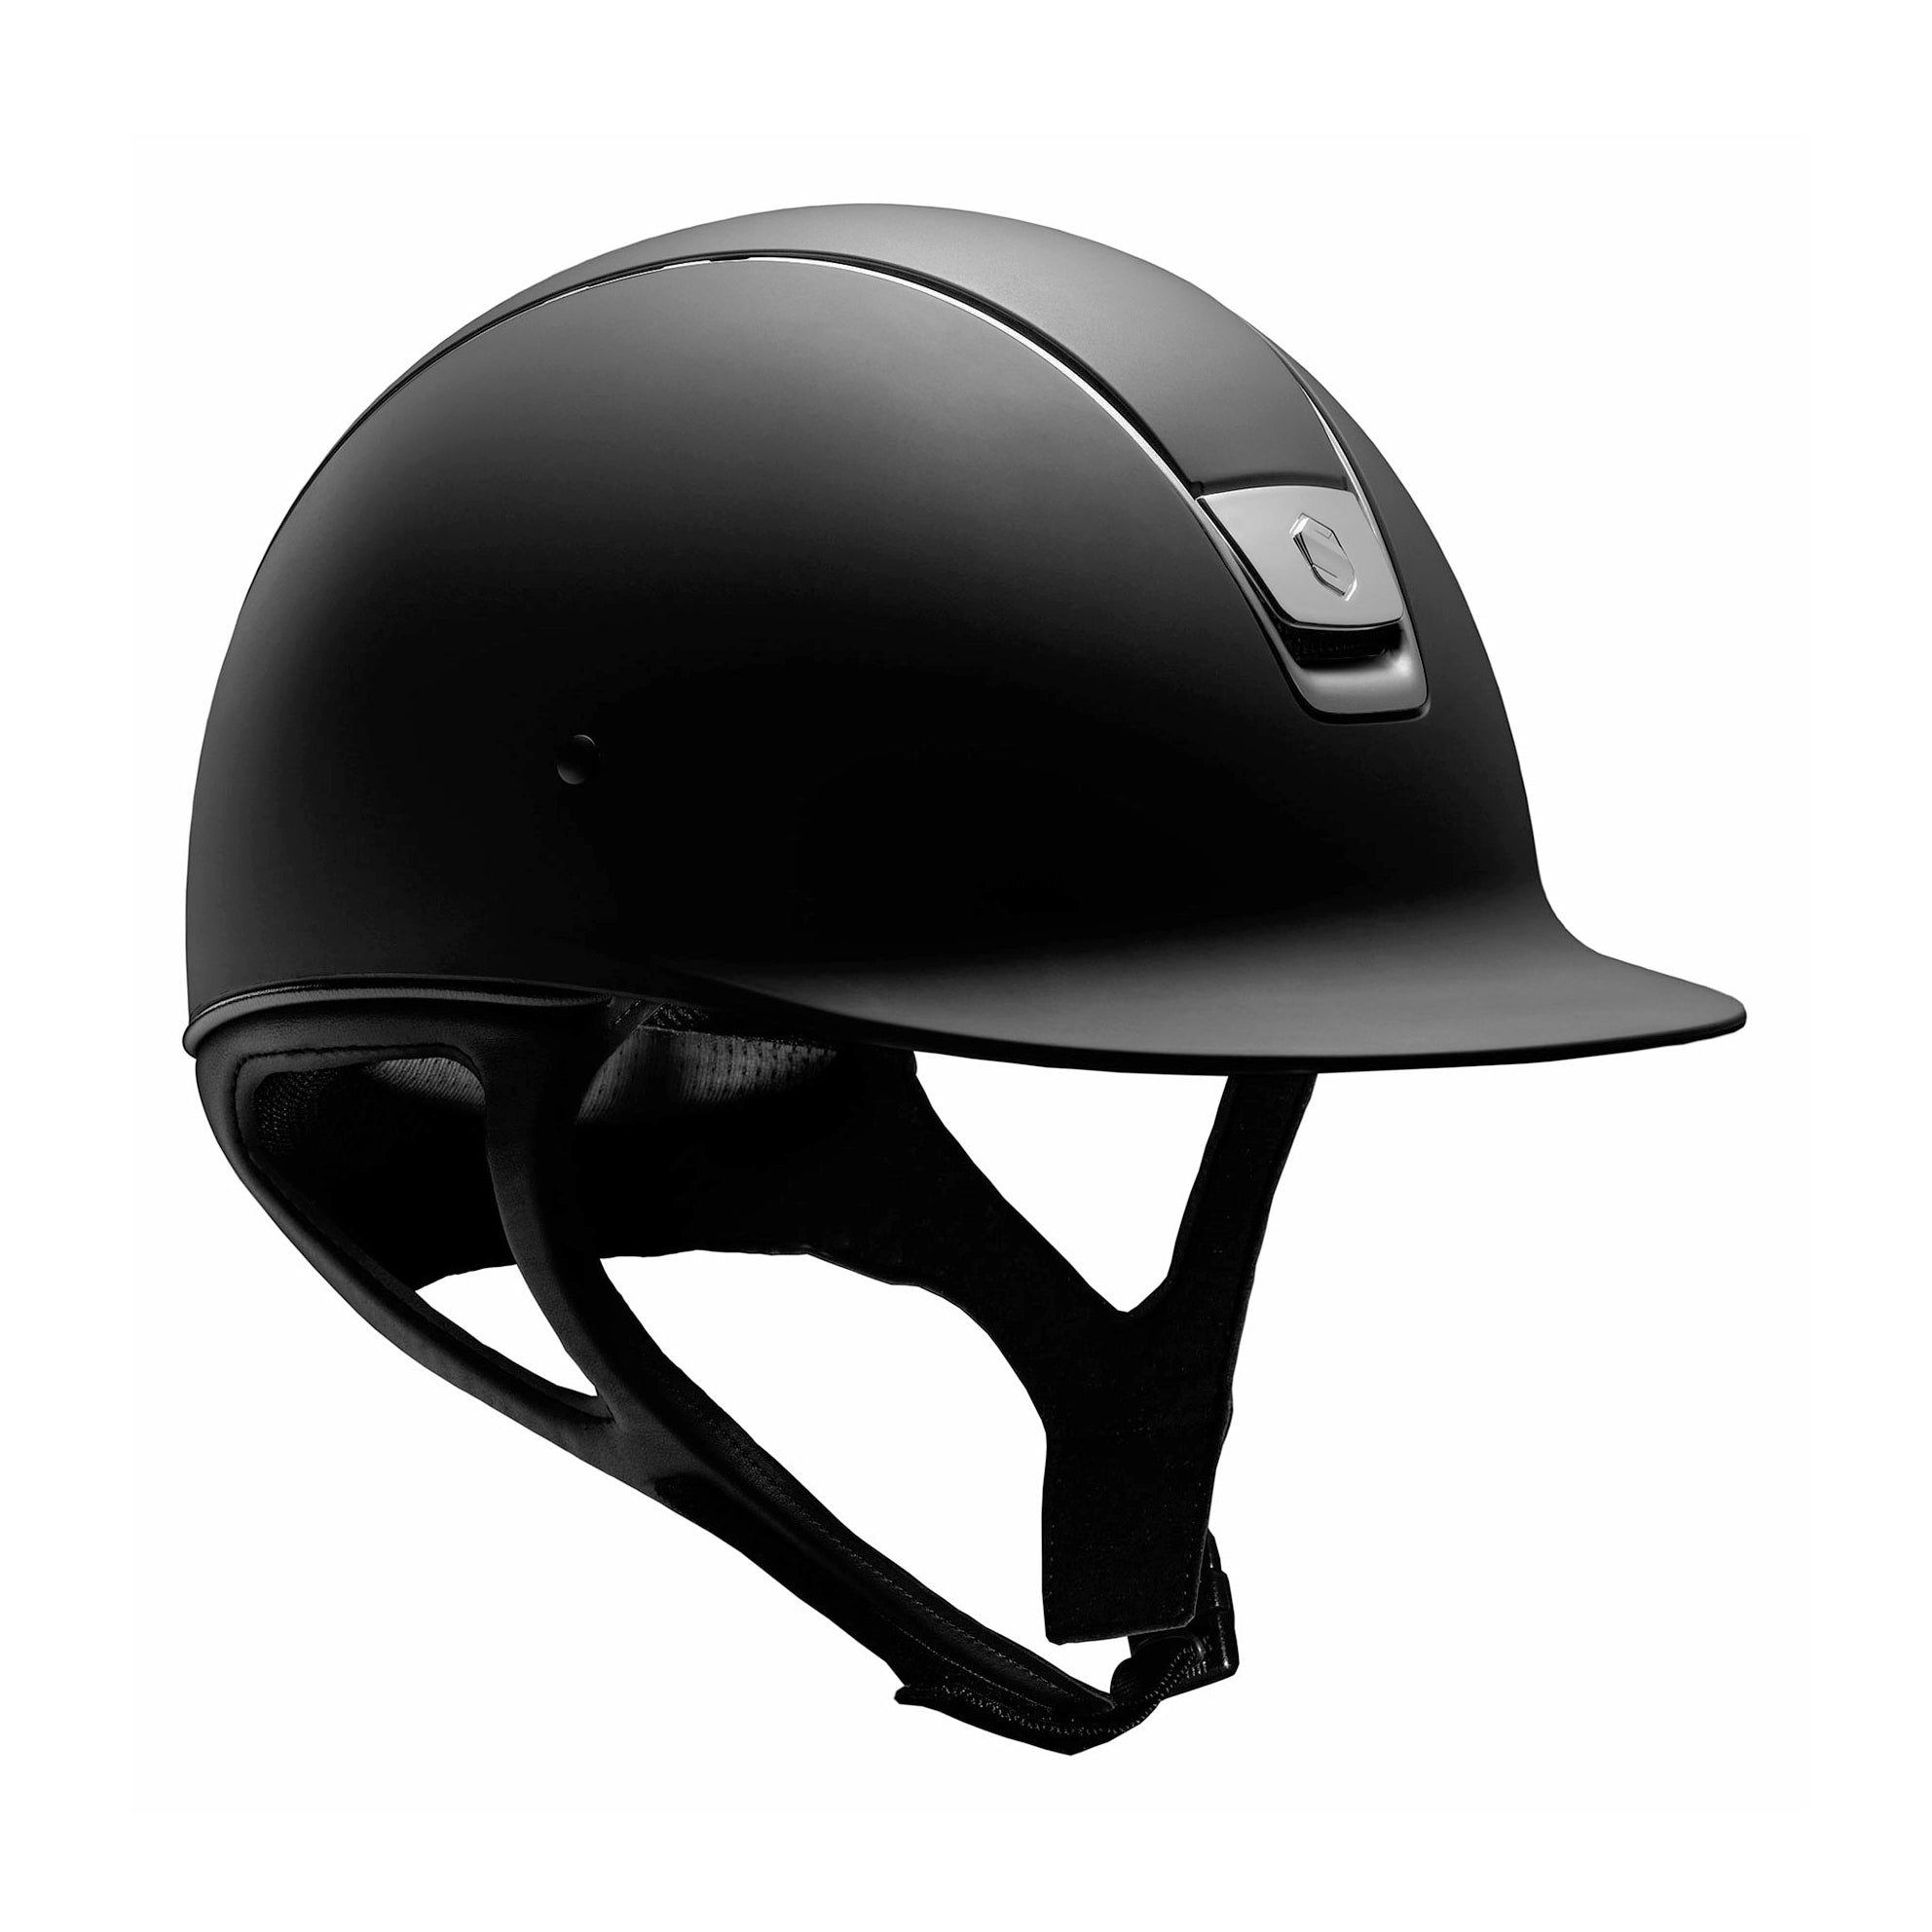 Samshield 1.0 Shadowmatt Helmet - in stock and ready to ship